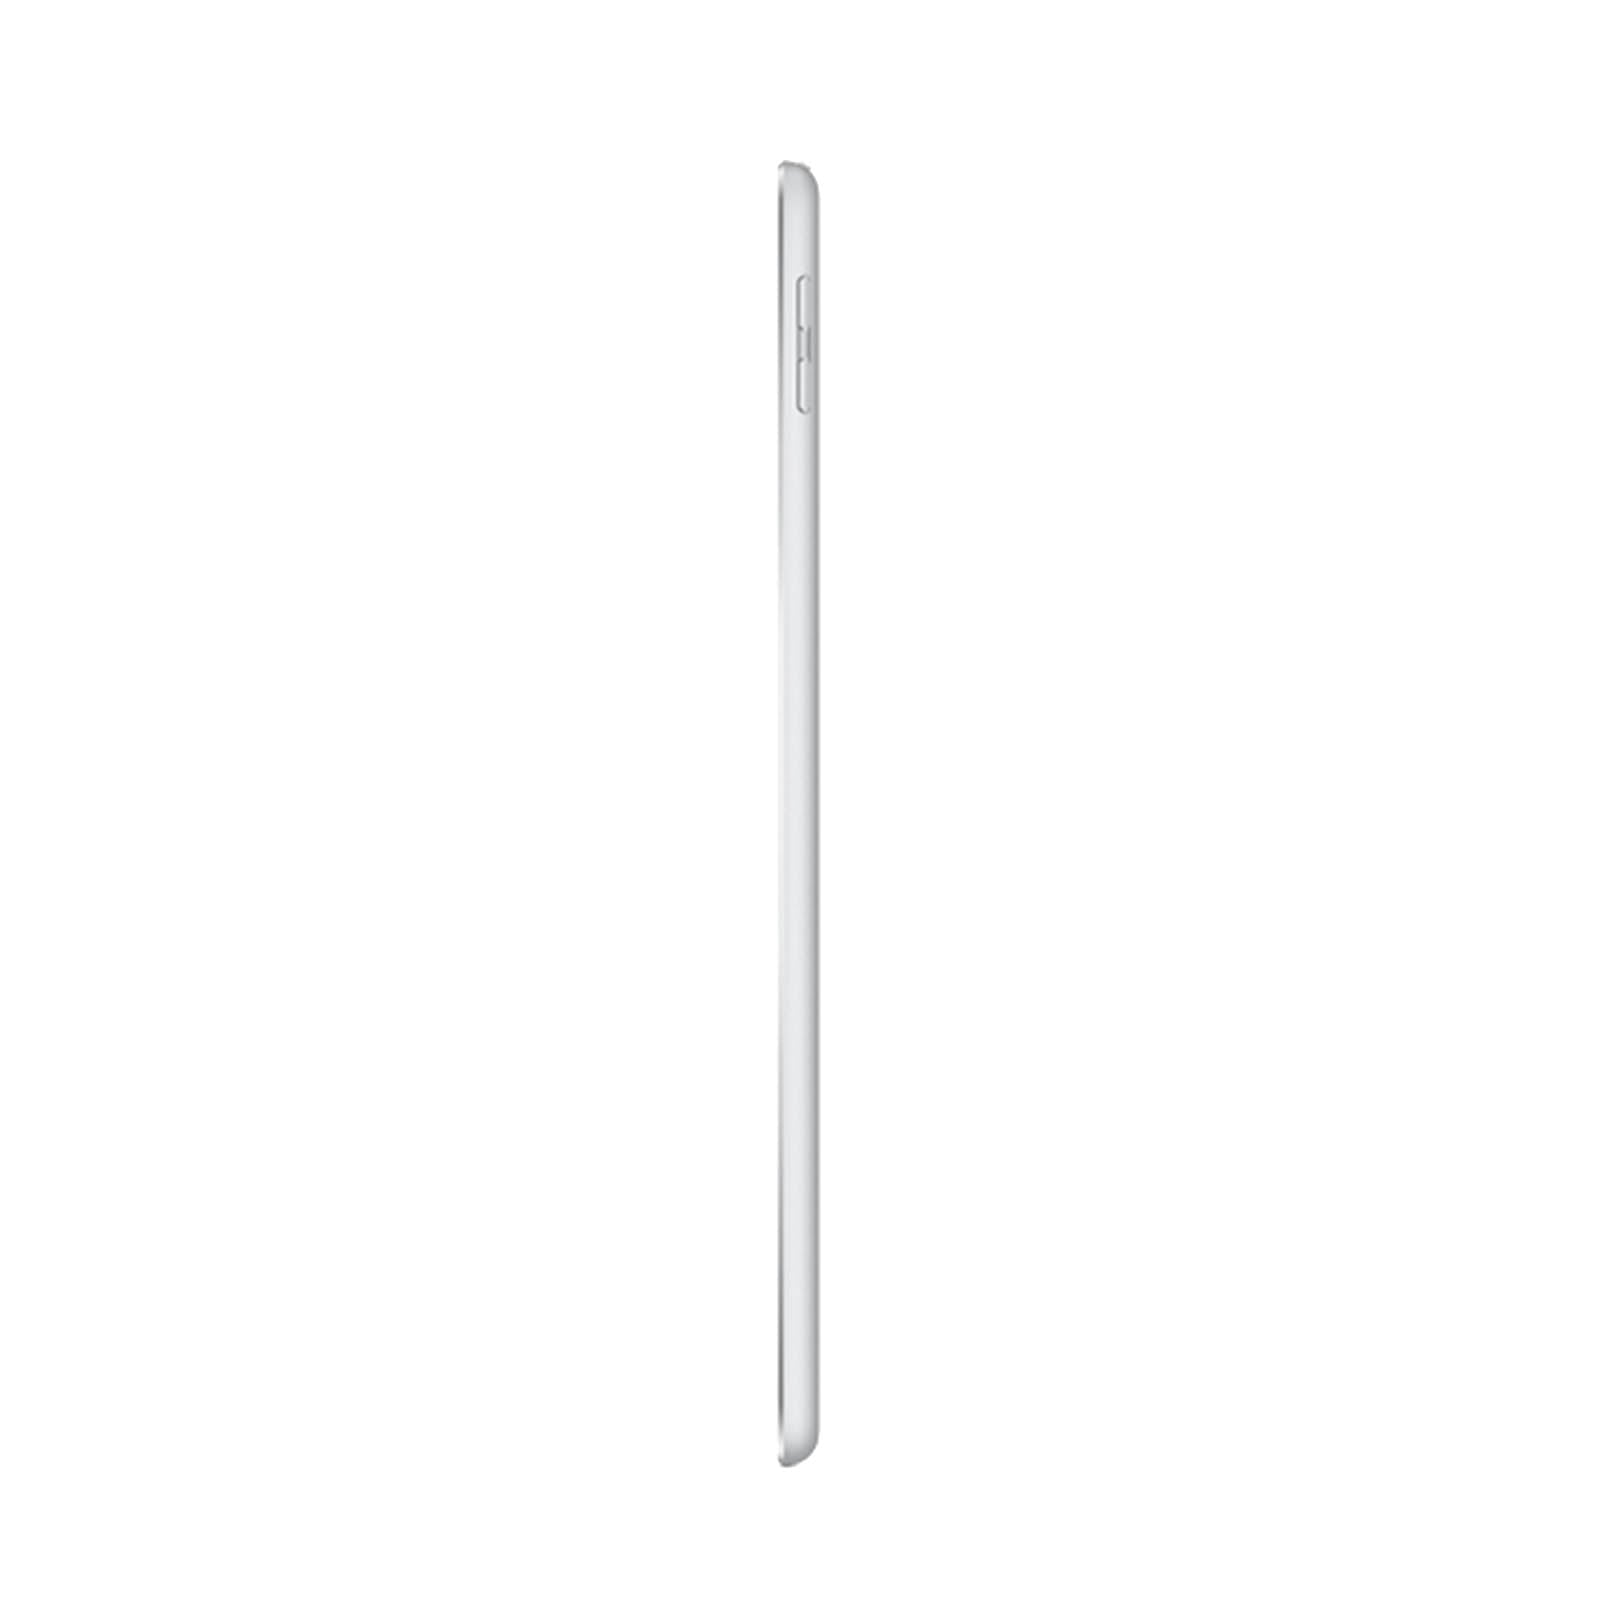 Apple iPad 5 32GB WiFi & Cellular Silver - Very Good